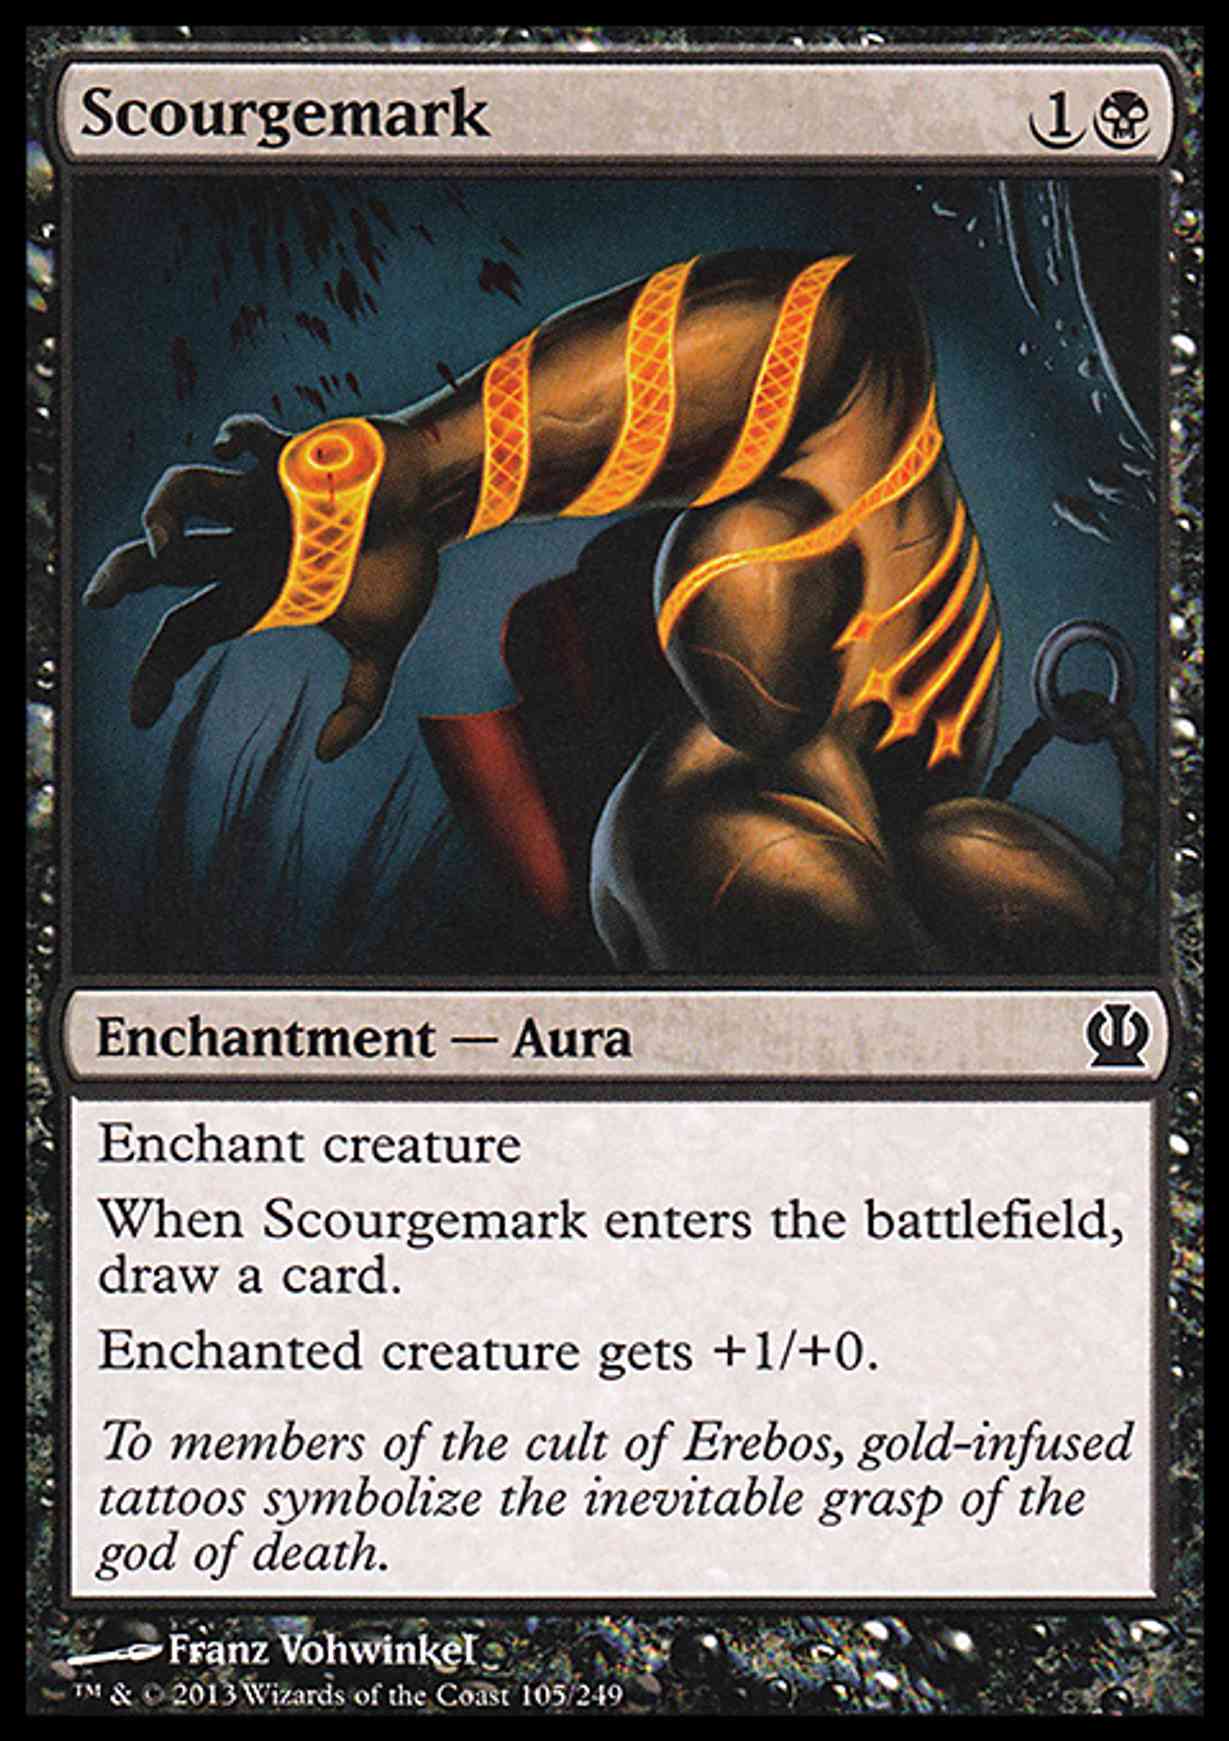 Scourgemark magic card front